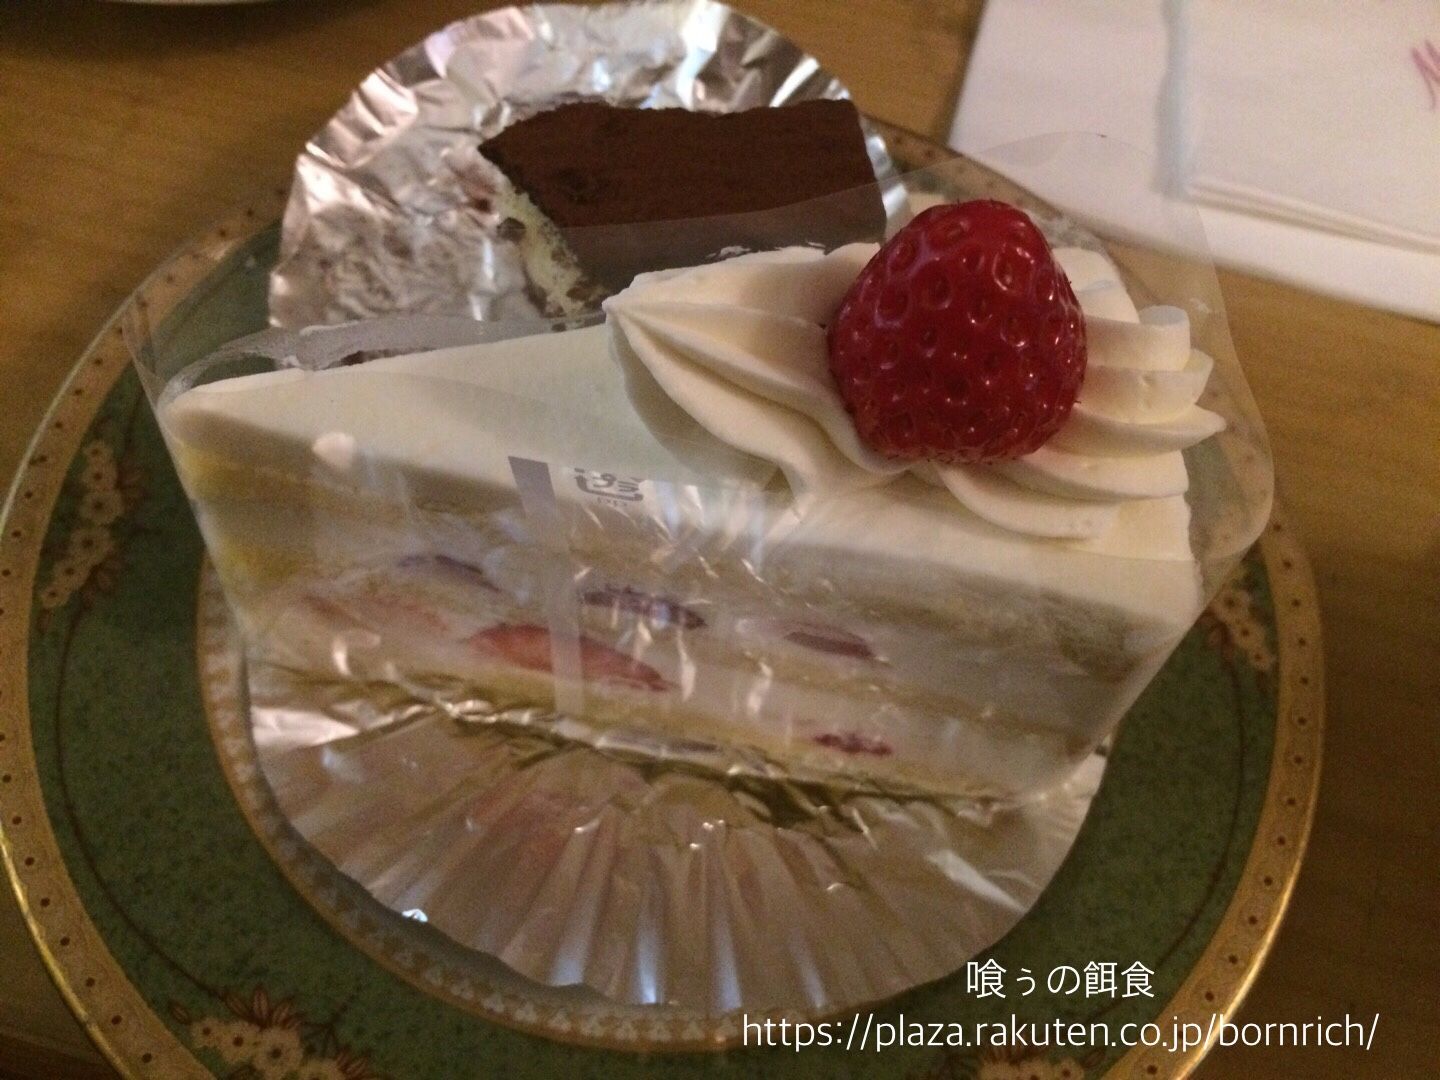 Cakes 喰ぅの餌食 Prey For Qu 楽天ブログ